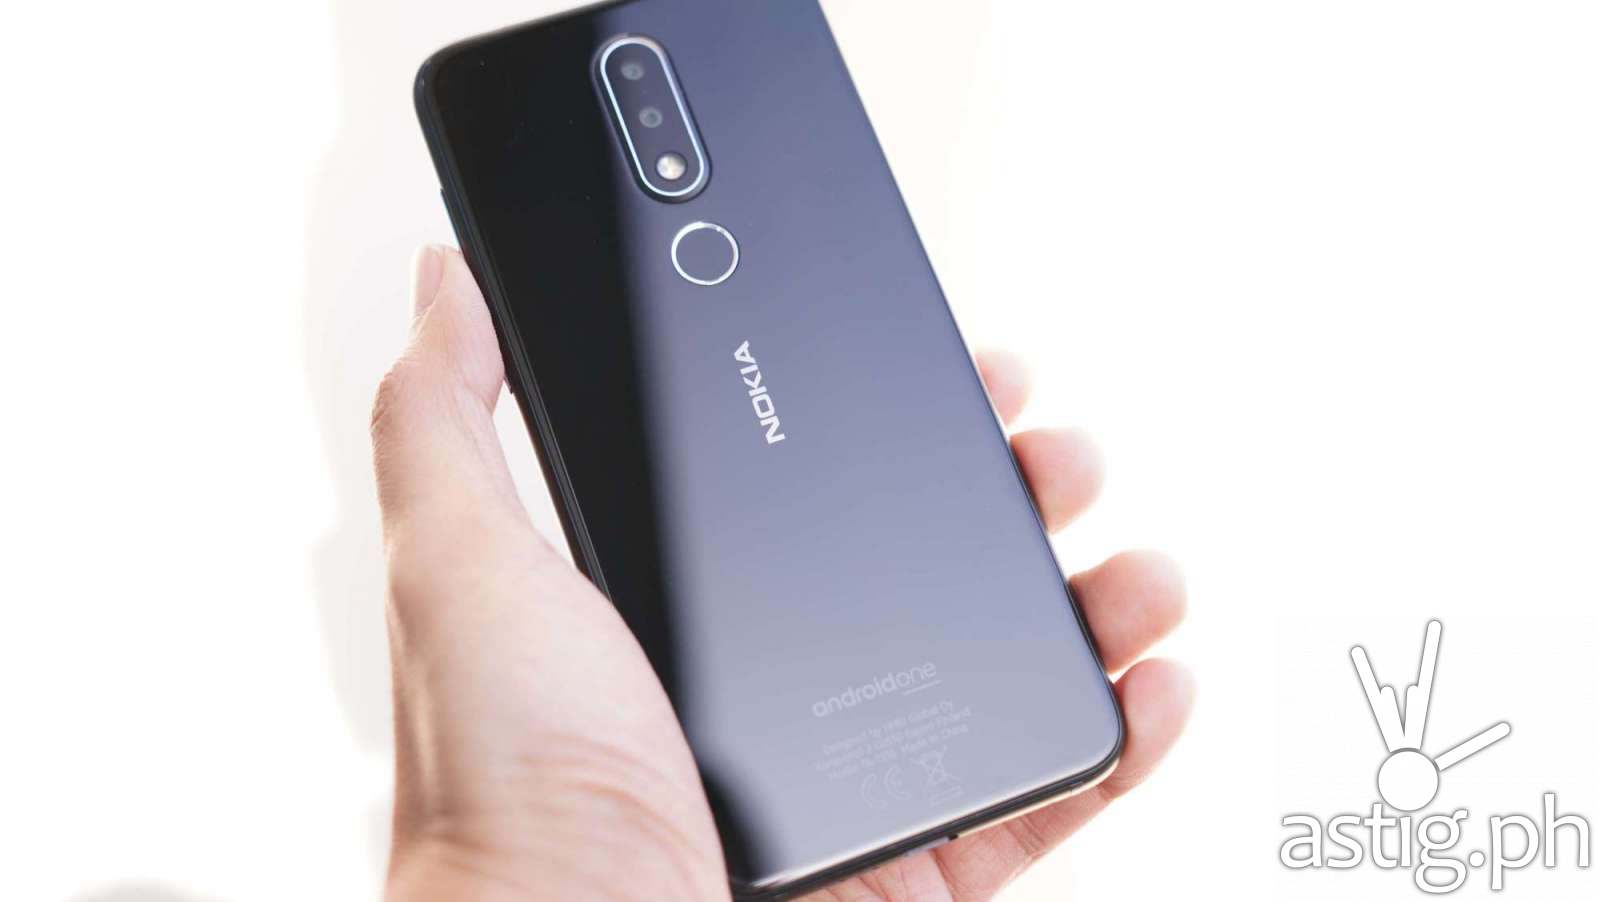 Back handheld white - Nokia 6.1 Plus (Philippines)